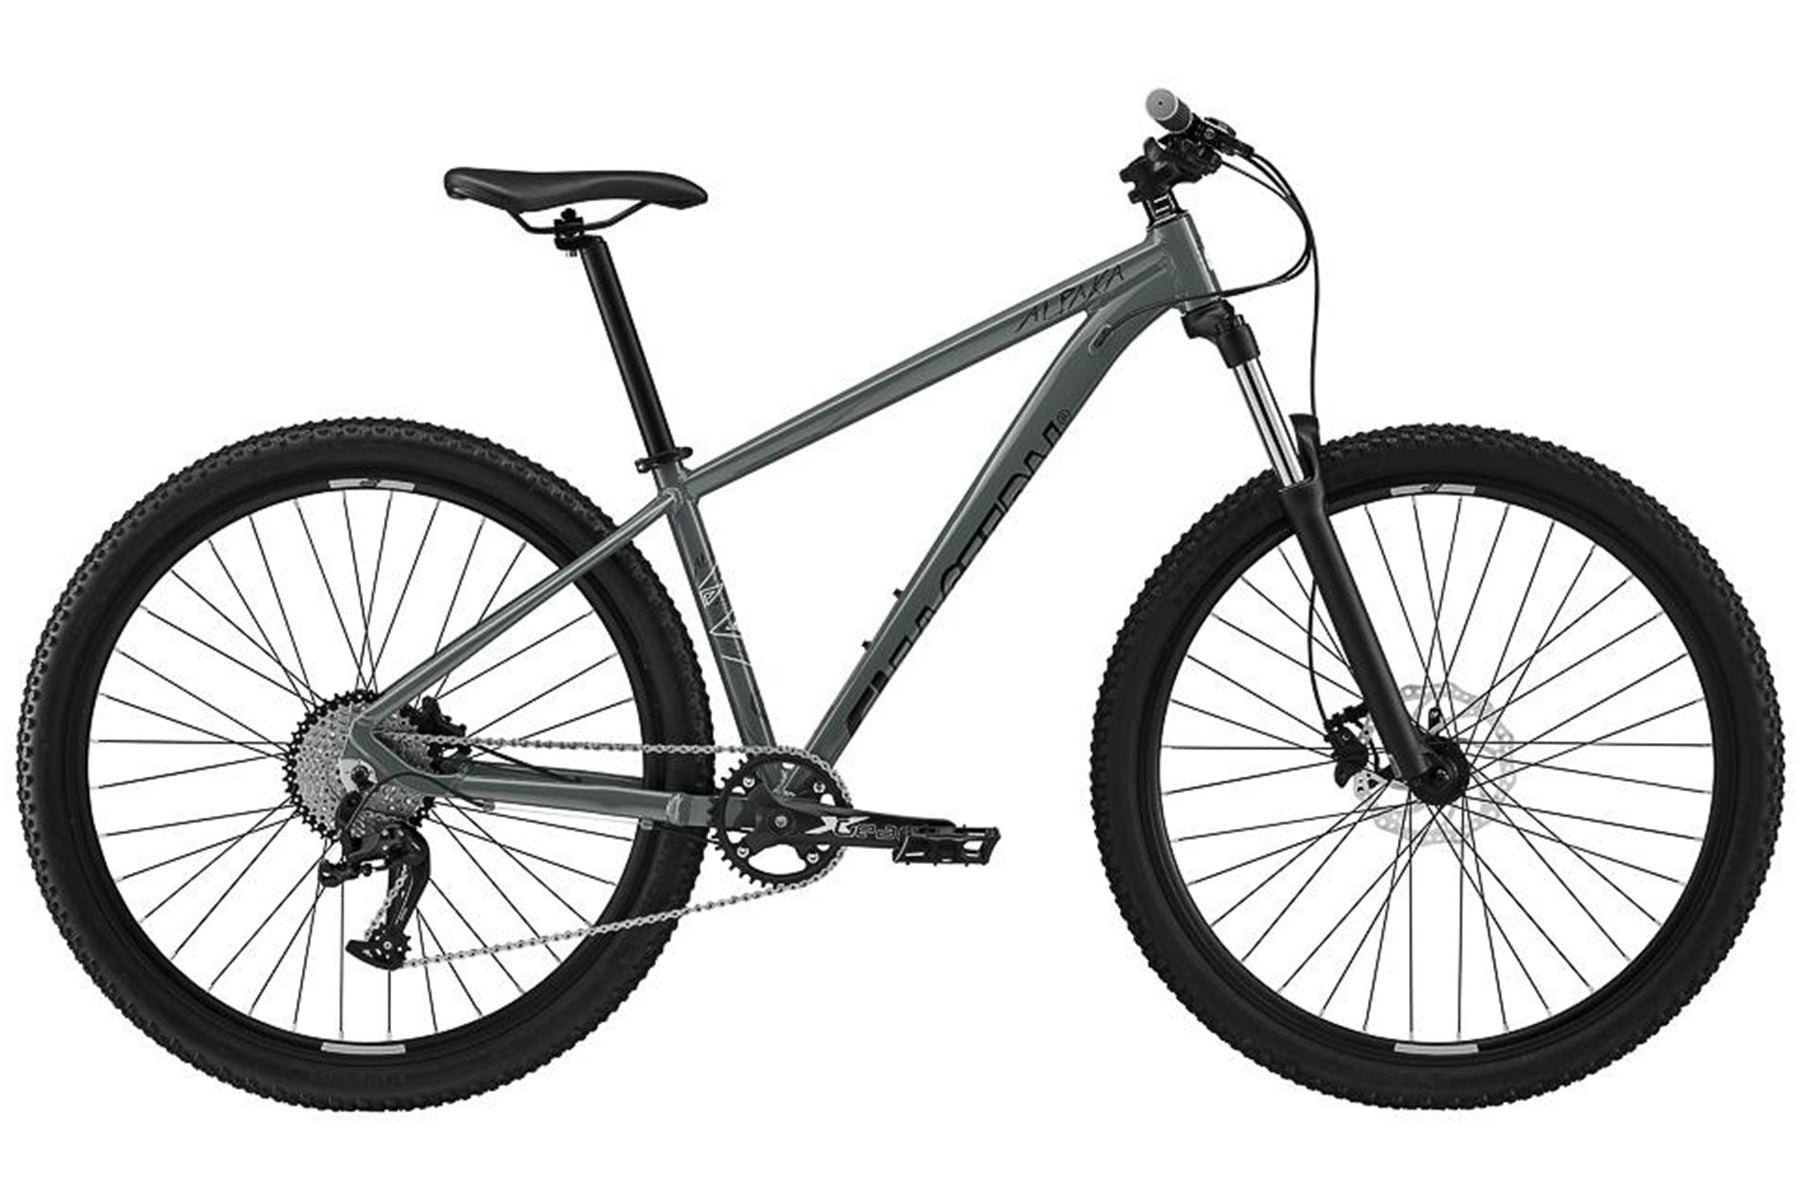 Eastern Alpaka 29 MTB Hardtail Bike - Gray